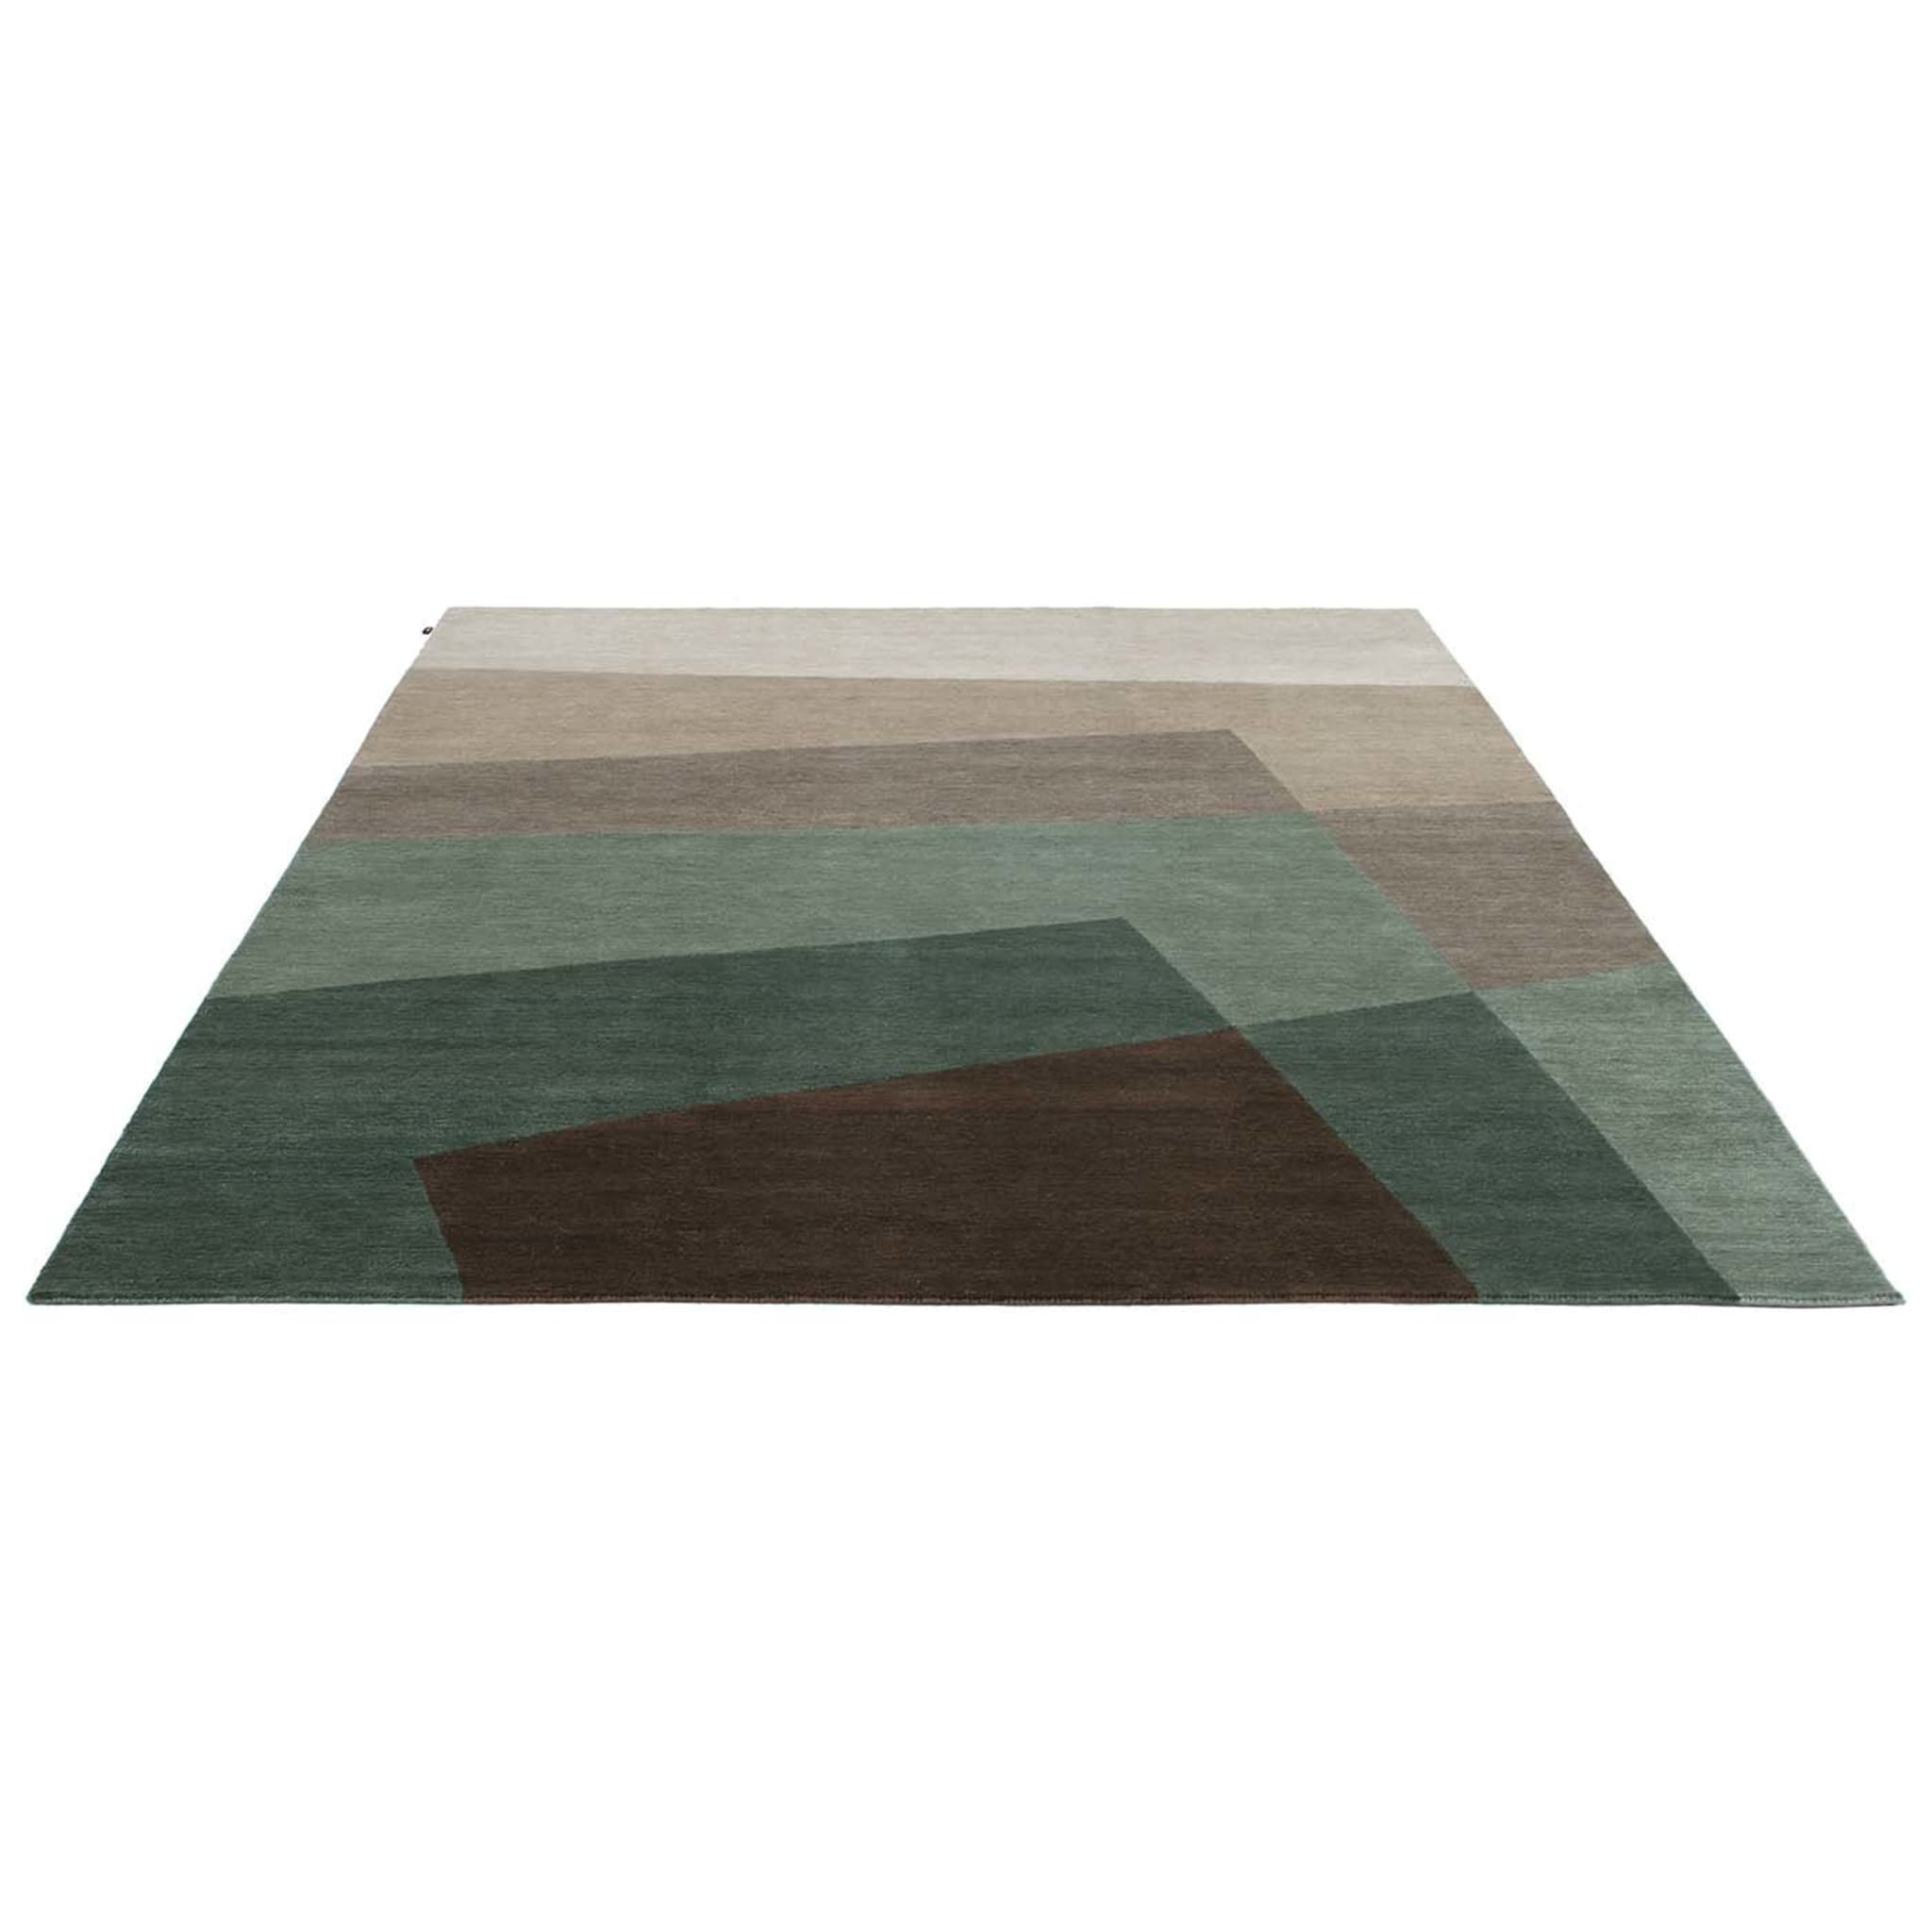 RD Shade Green Carpet by Rodolfo Dordoni - Alternative view 3